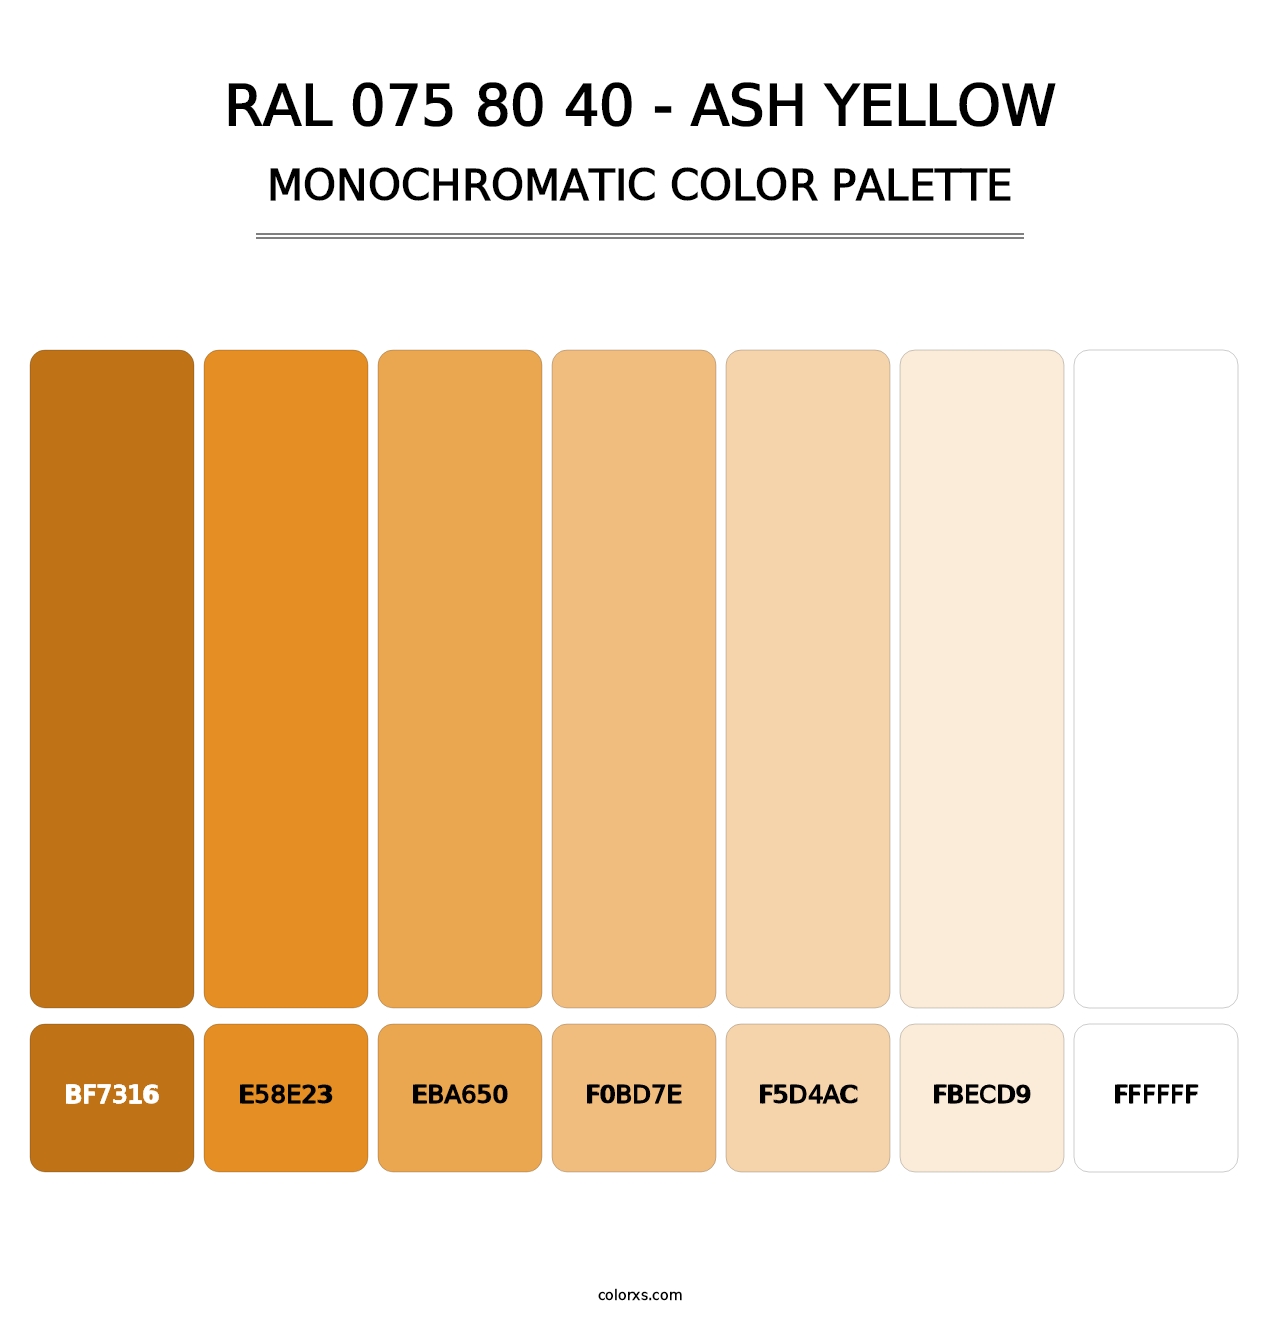 RAL 075 80 40 - Ash Yellow - Monochromatic Color Palette